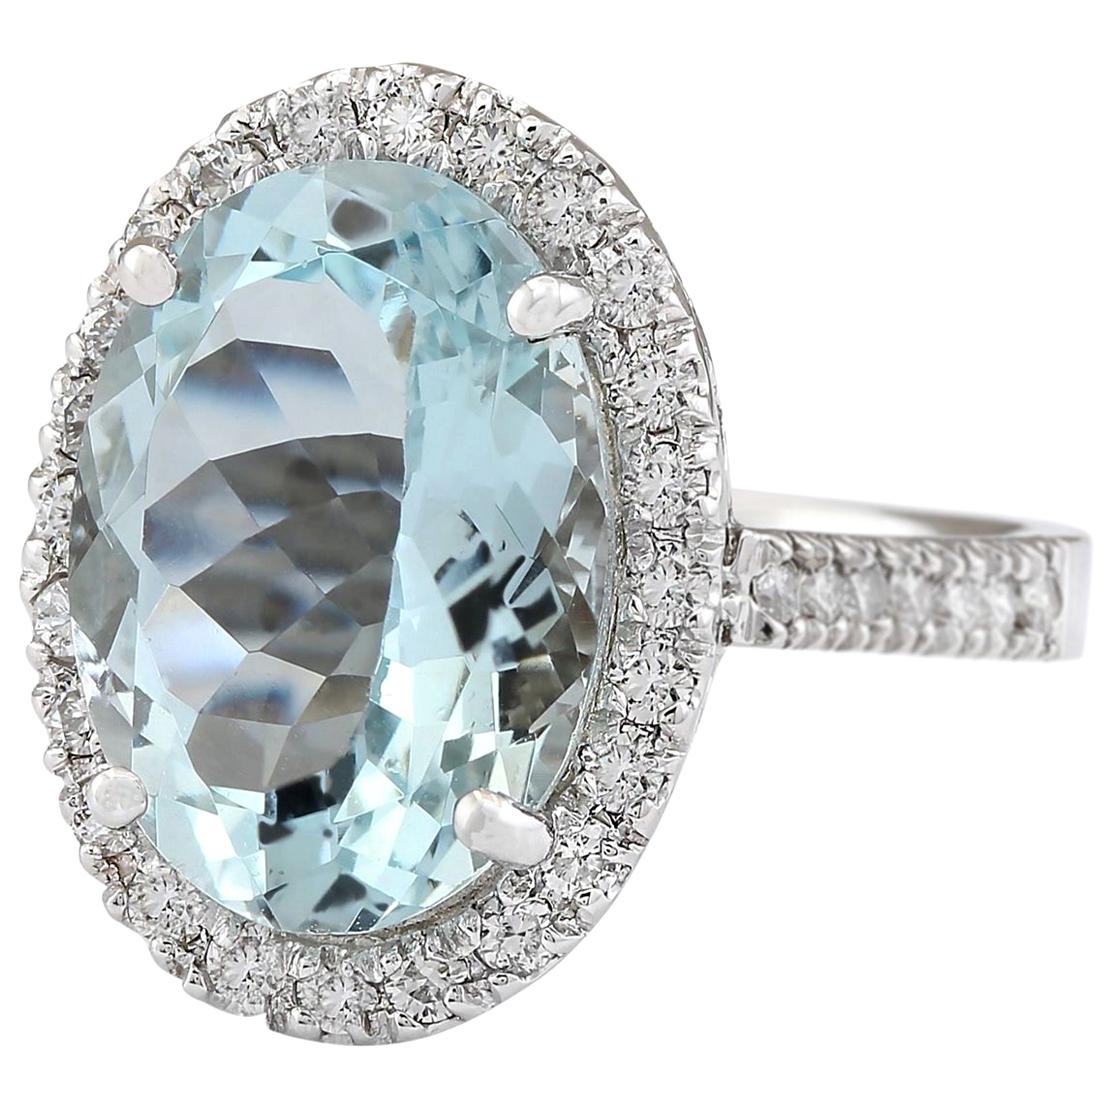 6.90 Carat Natural Aquamarine 14 Karat White Gold Diamond Ring
Stamped: 14K White Gold
Total Ring Weight: 6.6 Grams
Total Natural Aquamarine Weight is 6.10 Carat (Measures: 14.00x10.00 mm)
Color: Blue
Total Natural Diamond Weight is 0.80